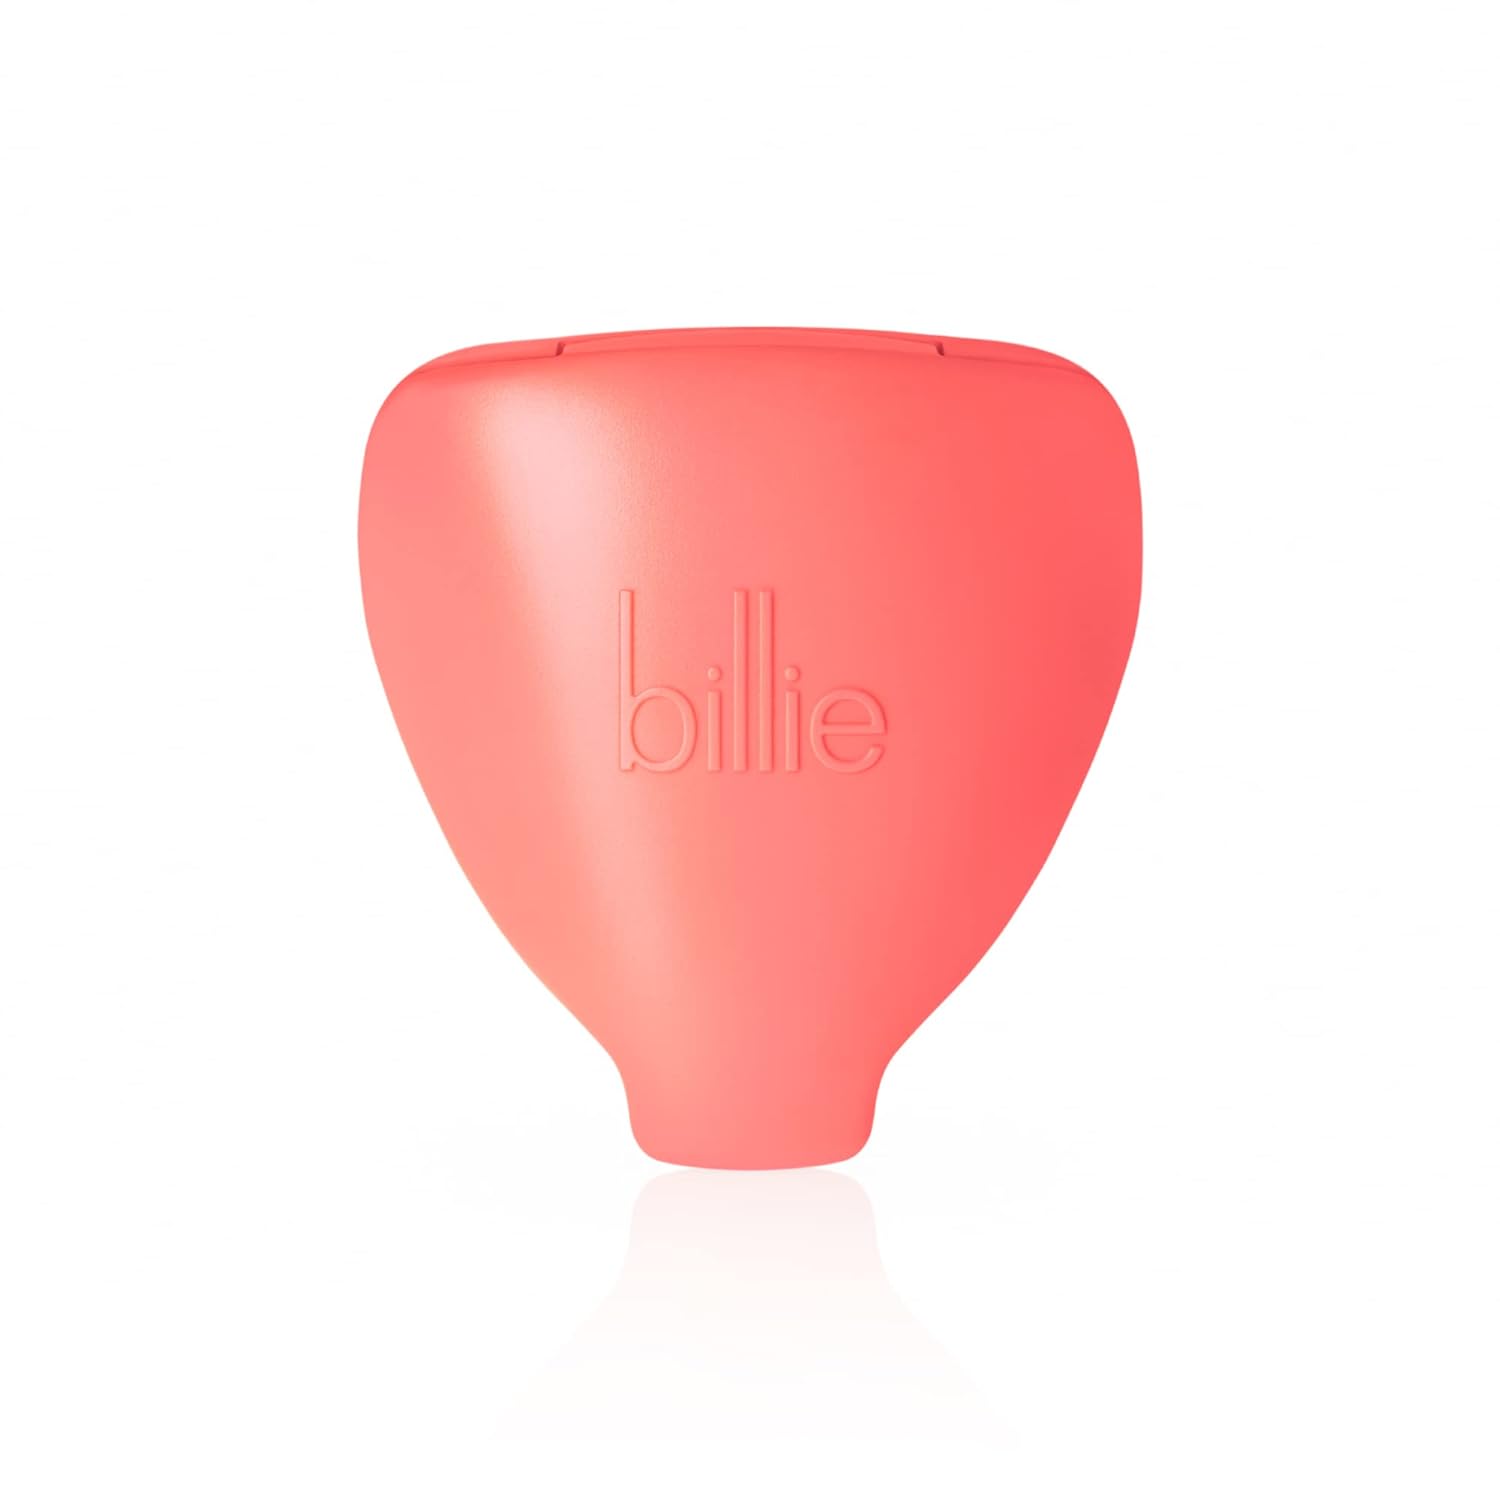 Billie 5-Blade Women’s Razor Travel Case - Take Your Razor To-Go - Magnetic Top - Easy Storage - Portable & Convenient - Coral